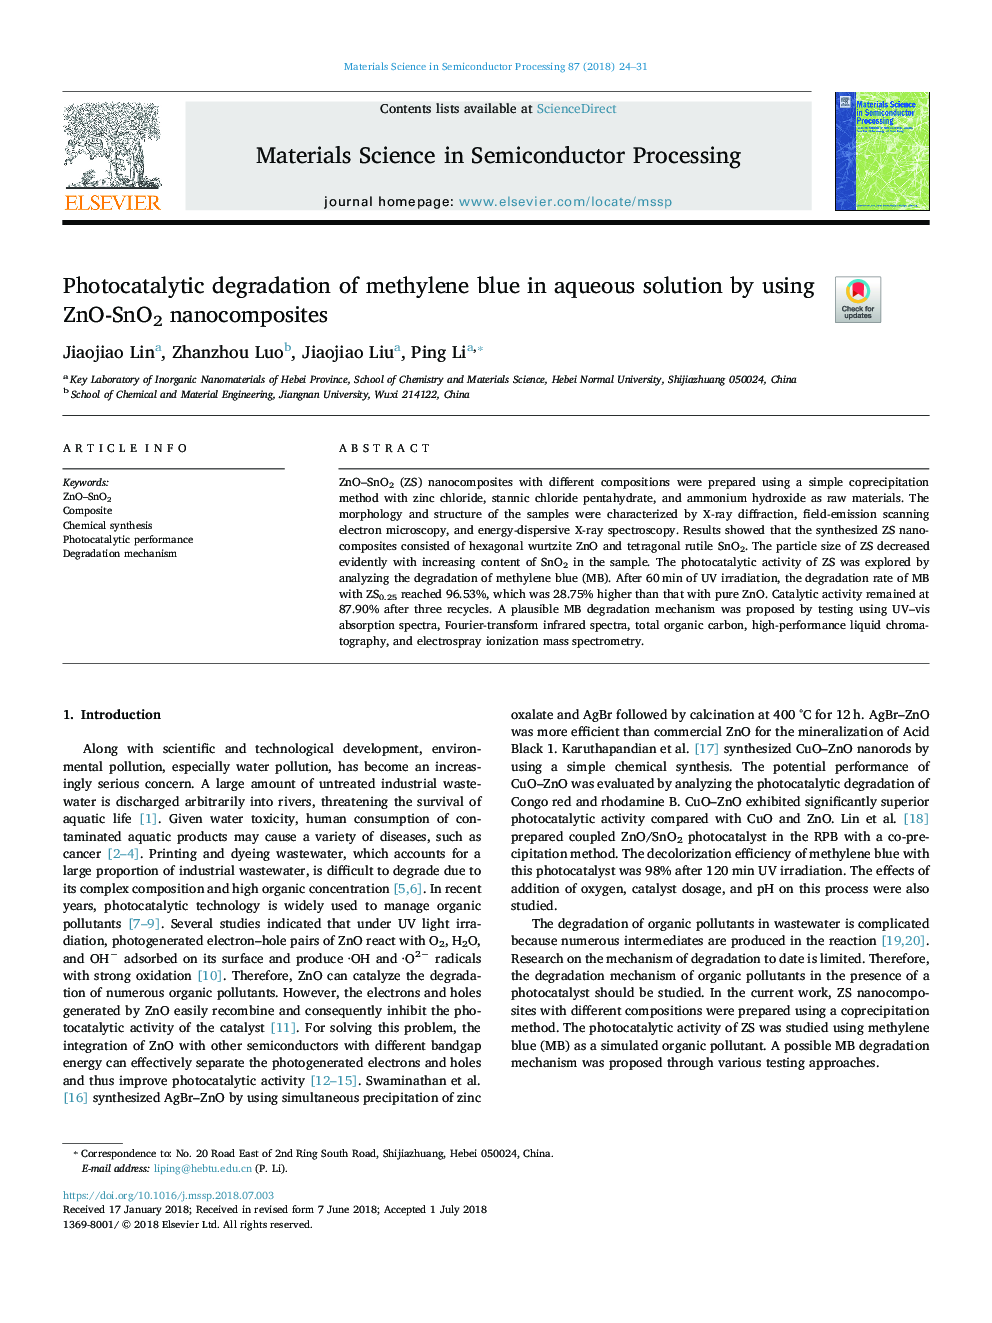 Photocatalytic degradation of methylene blue in aqueous solution by using ZnO-SnO2 nanocomposites